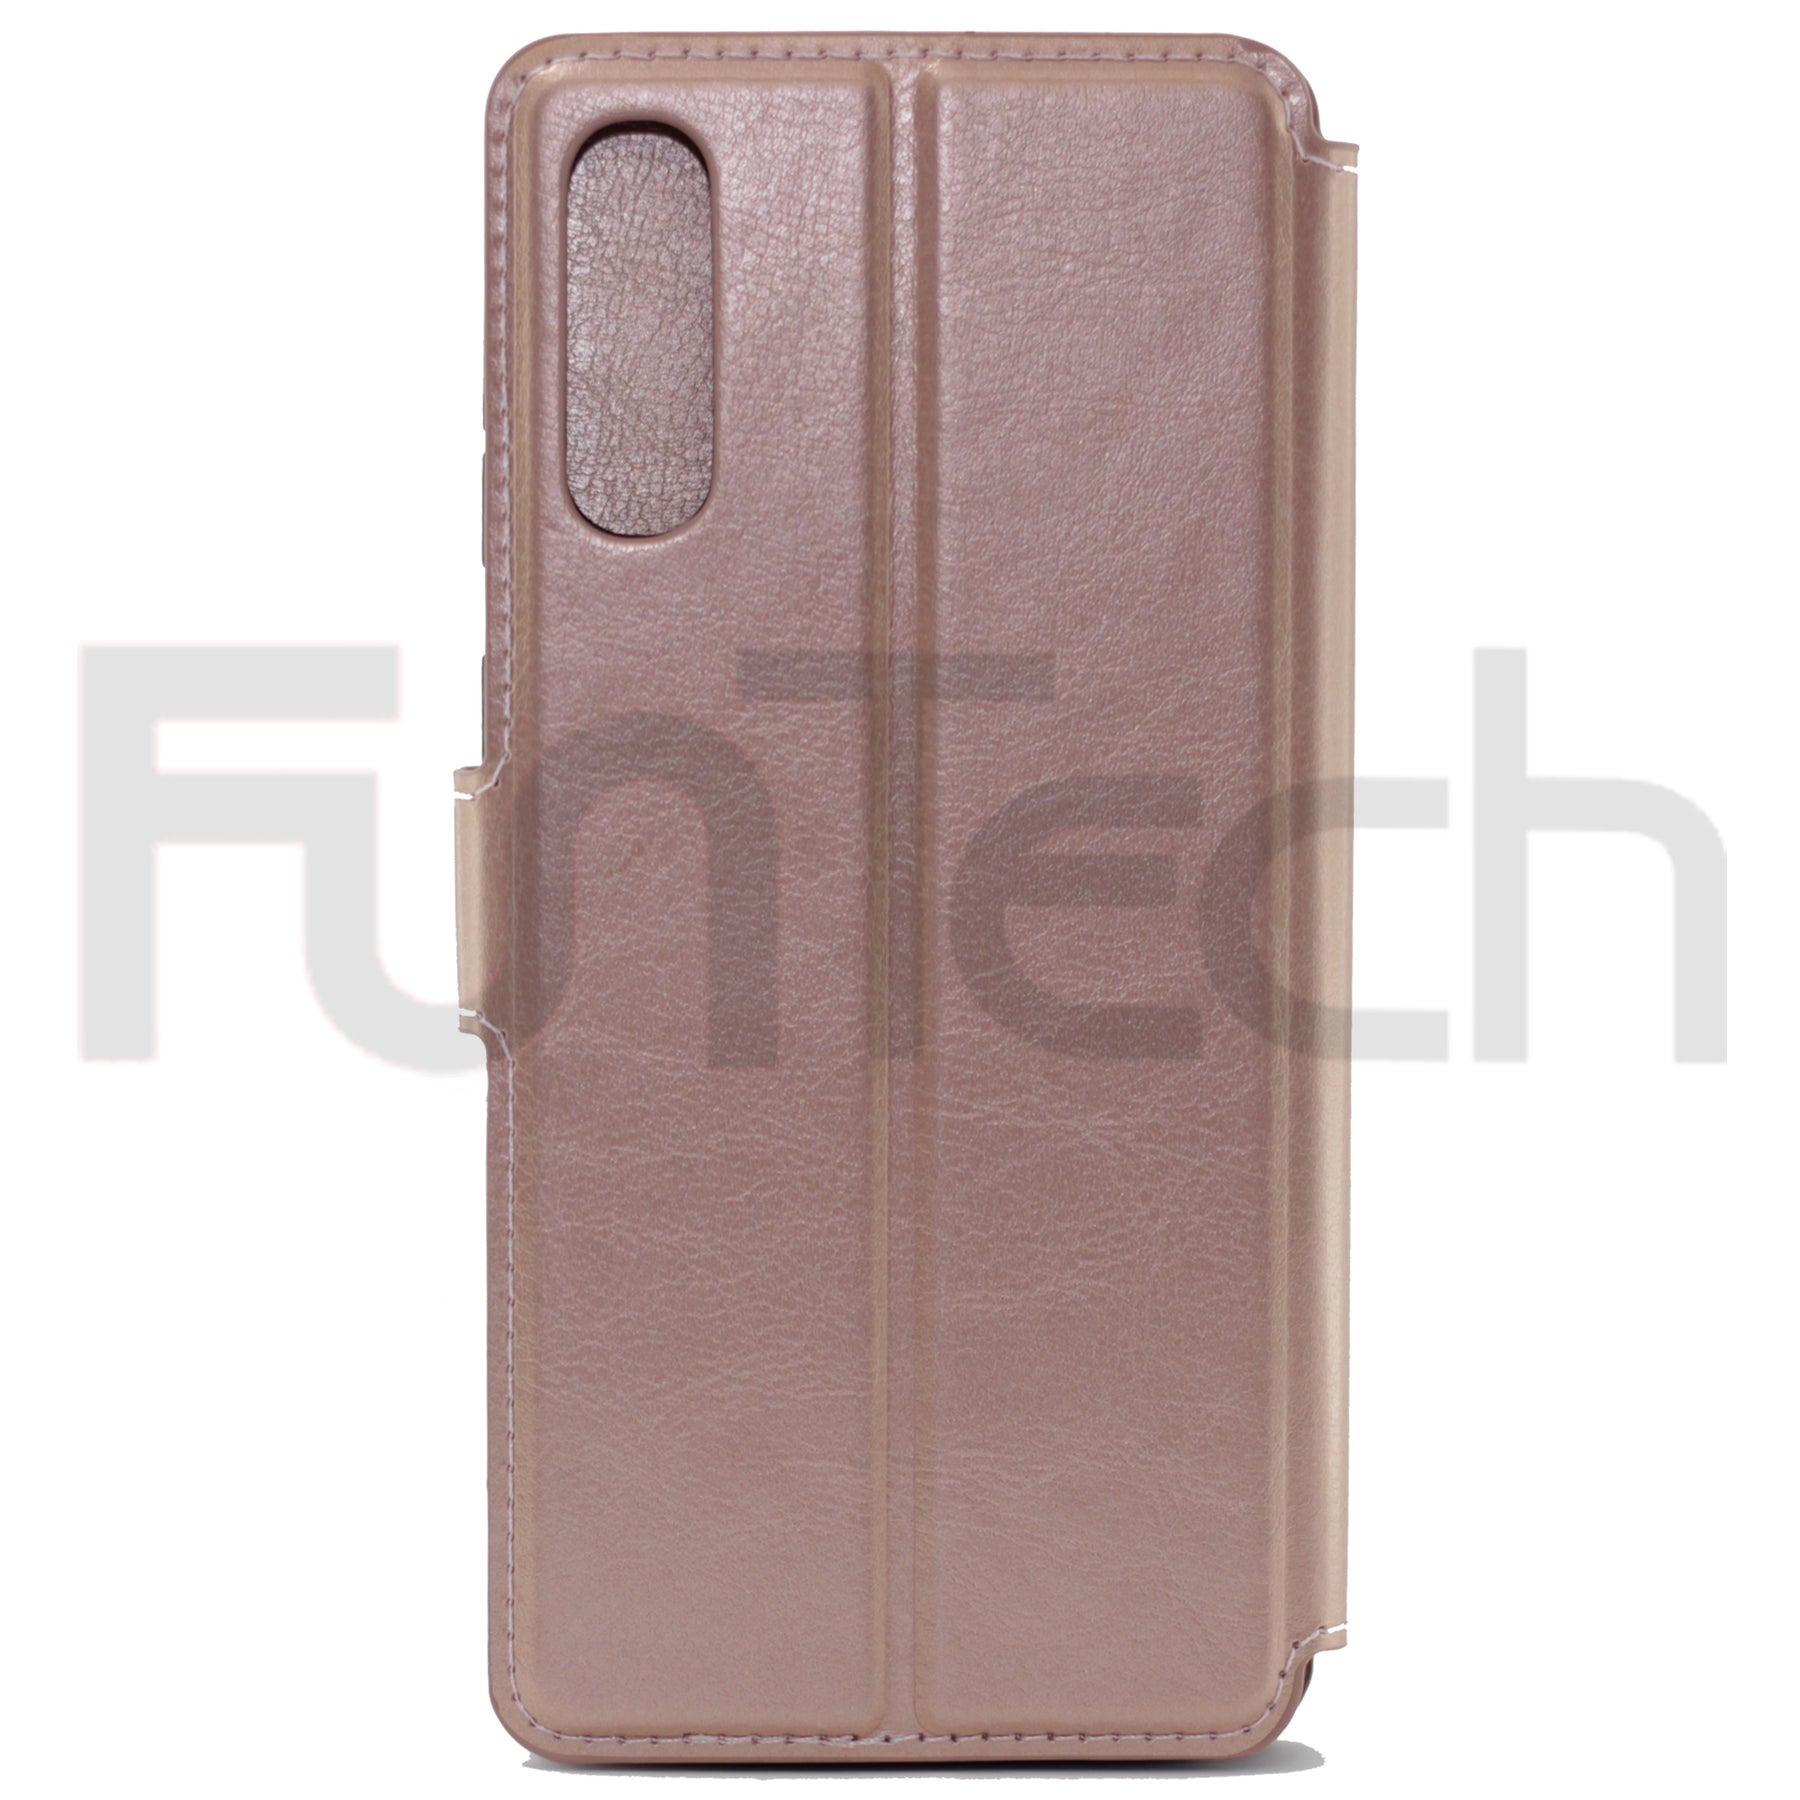 Samsung A50 Case, Color Pink,